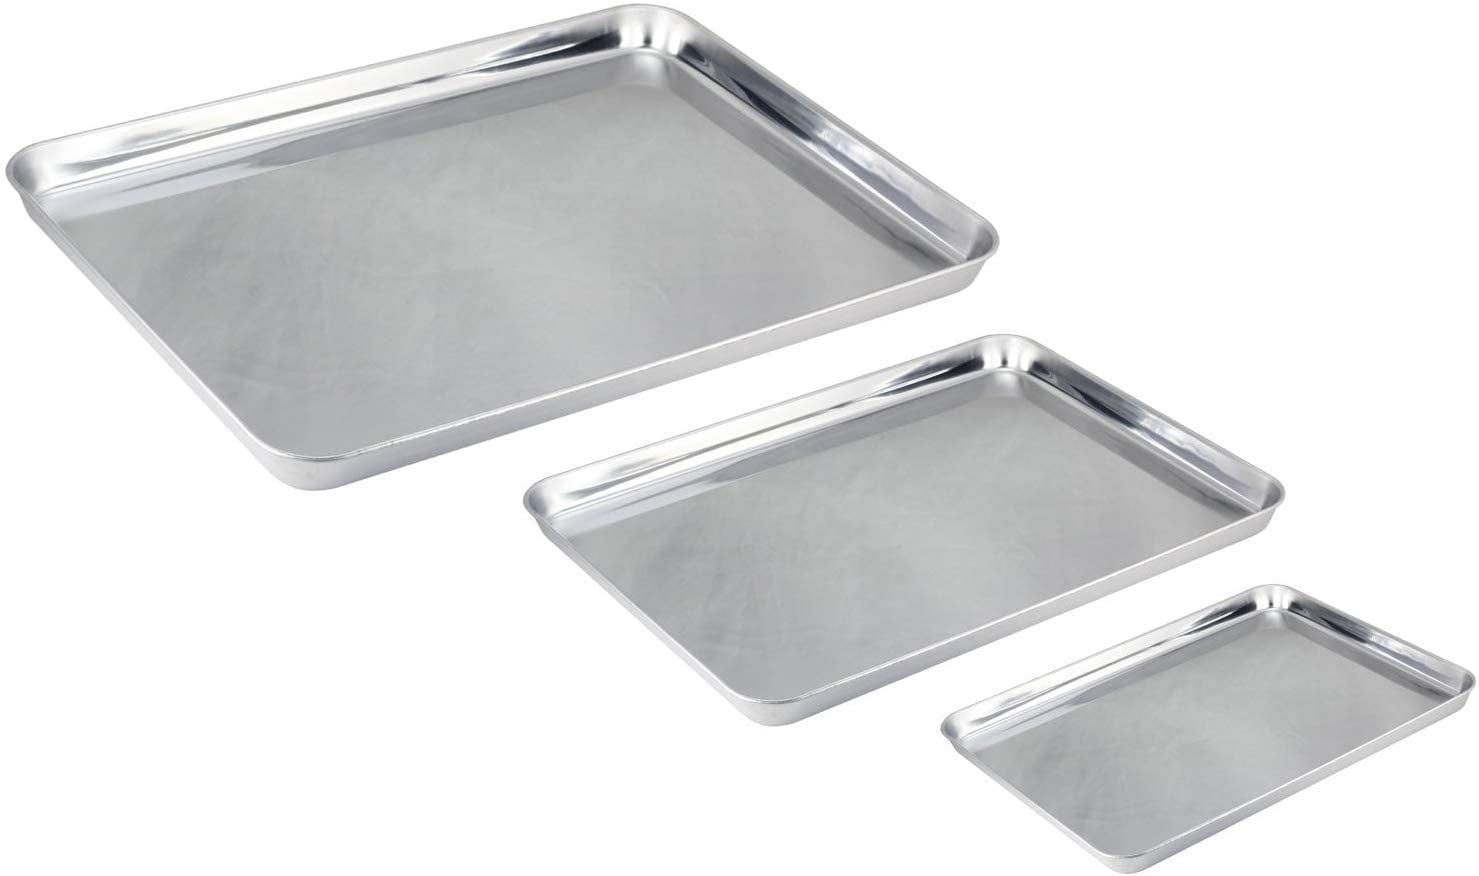 3 Sizes Stainless Steel Cookie Sheet Pan&Rack Set Baking Oven Tray Toaster Roast 